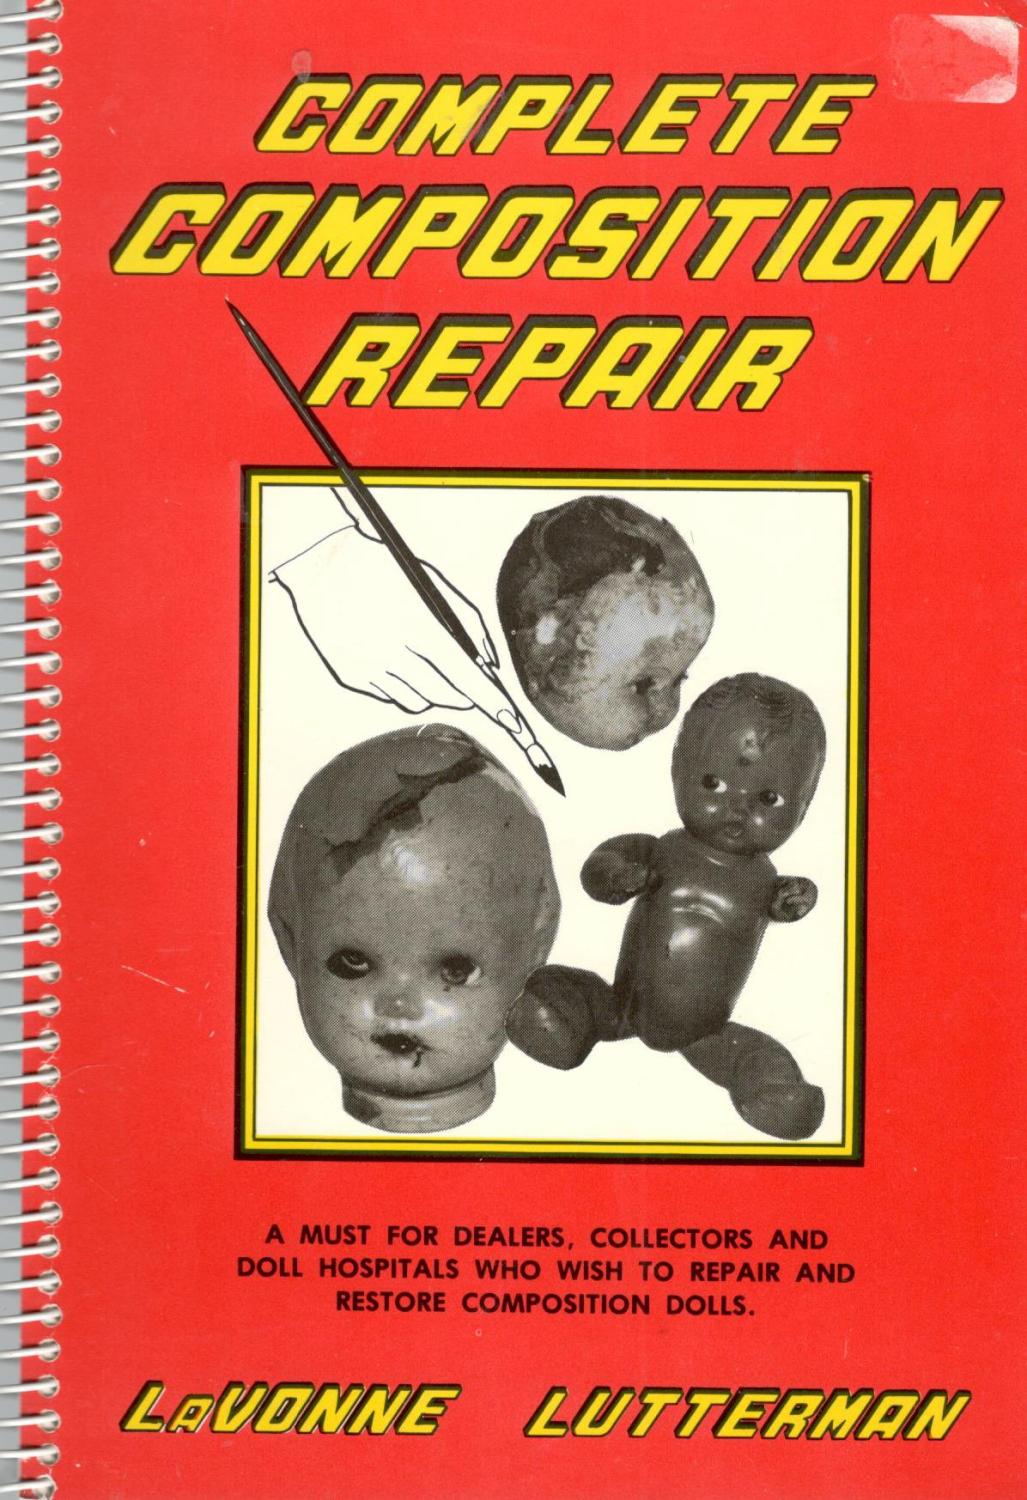 Professional Composition Compo Doll Restoration repair book!